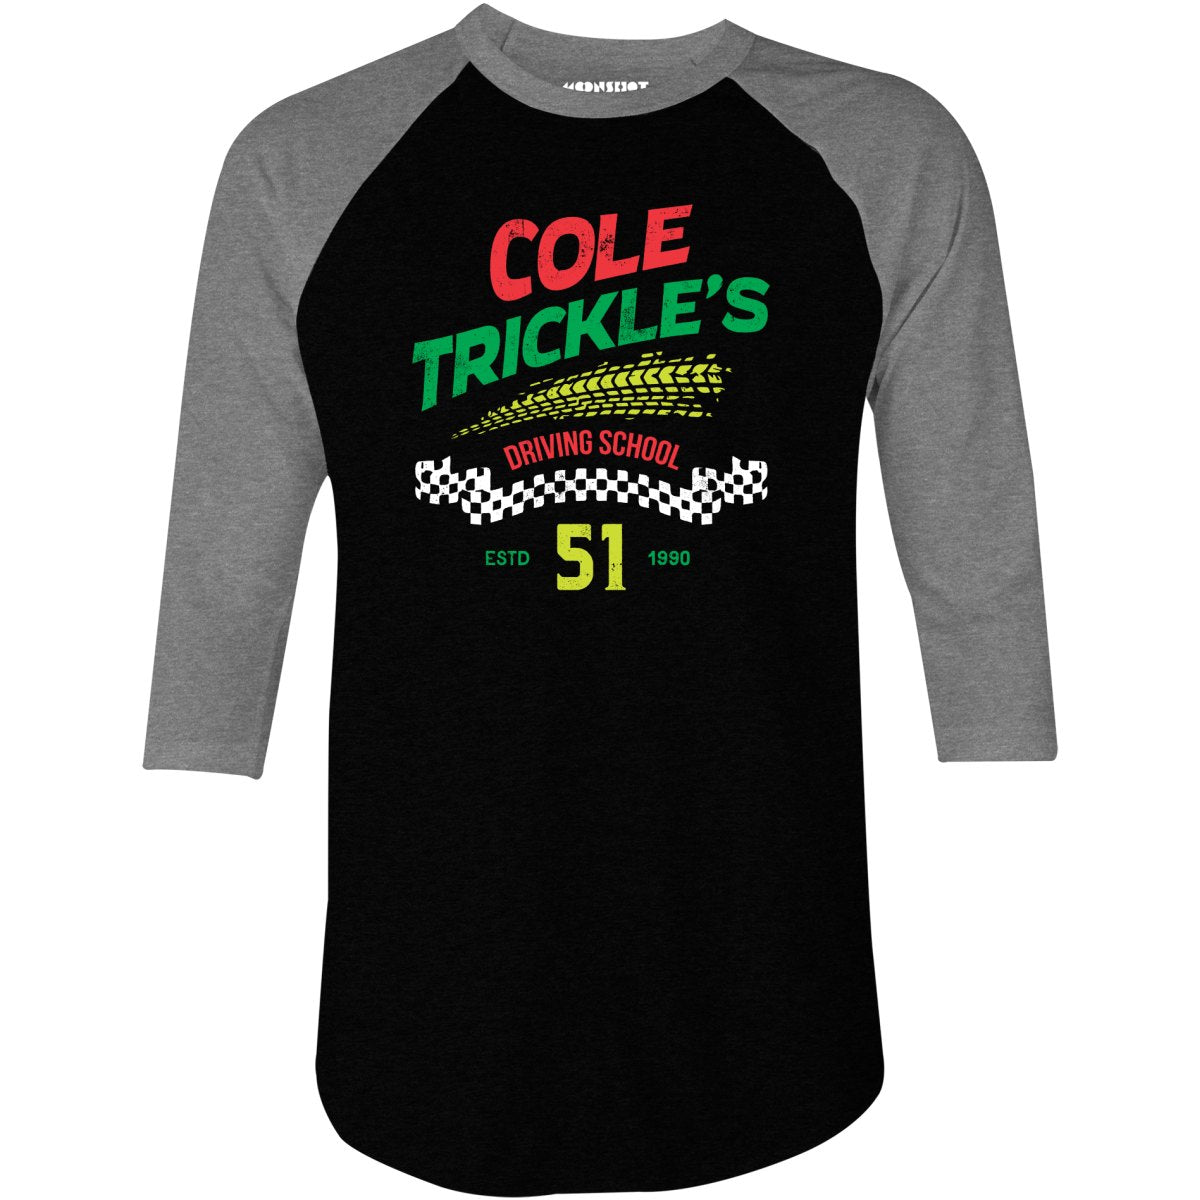 Cole Trickle's Driving School - 3/4 Sleeve Raglan T-Shirt